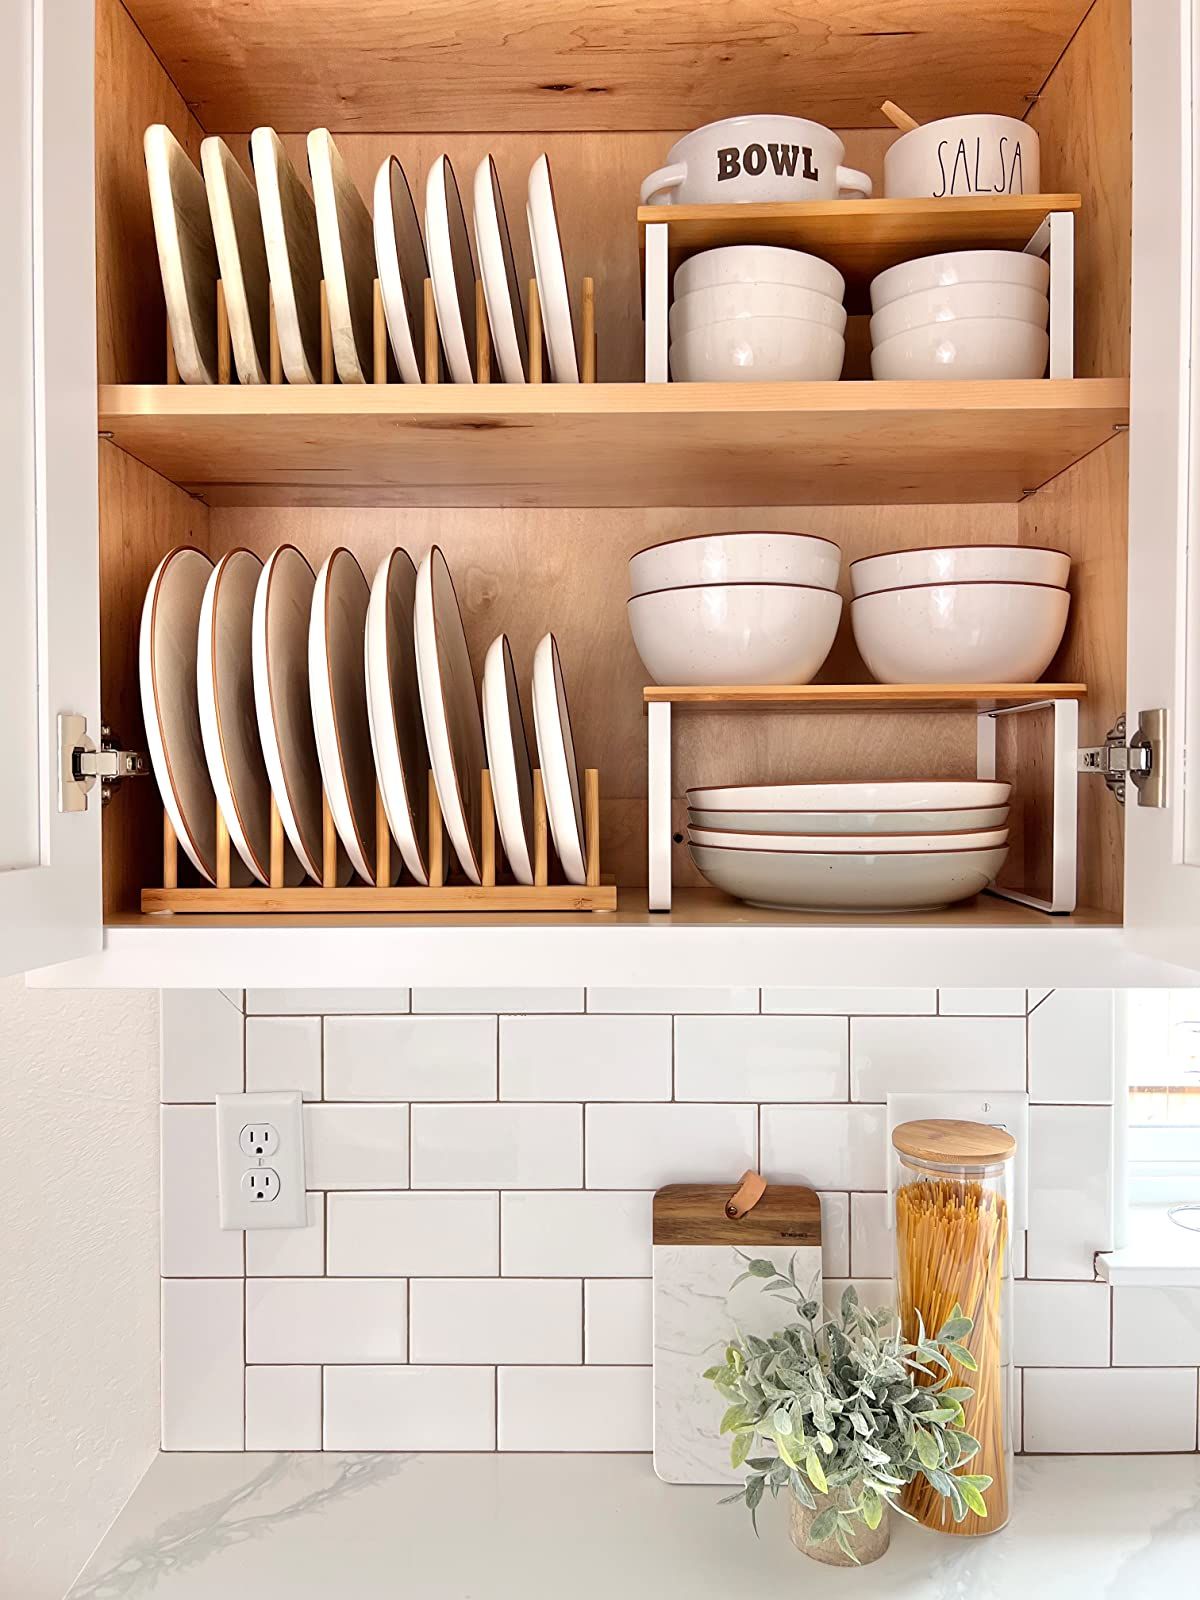 Unique and innovative kitchen storage
ideas